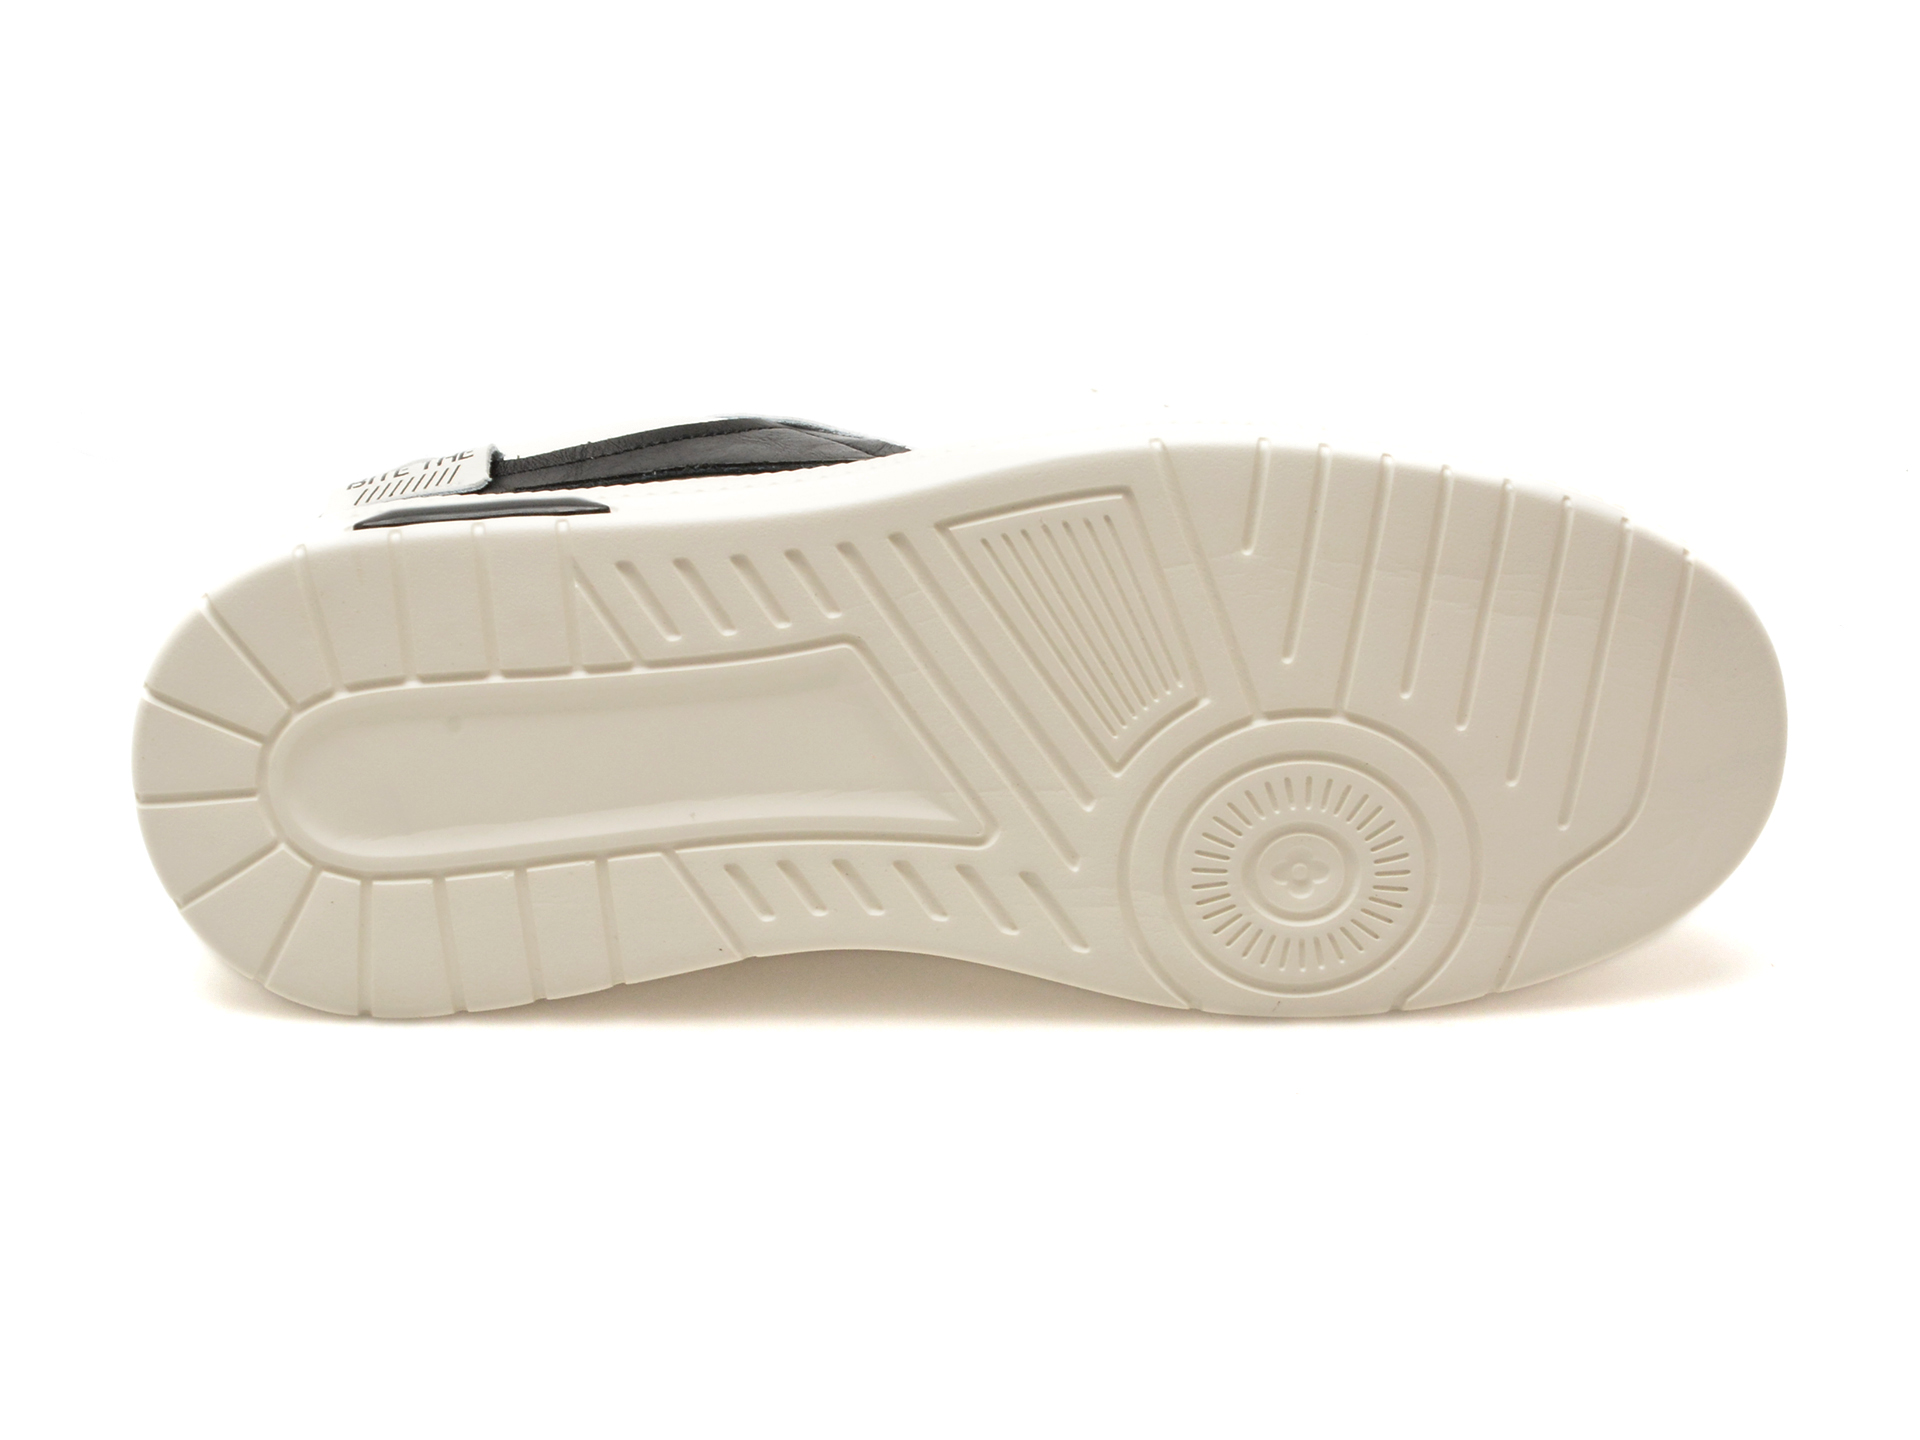 Pantofi Casual BITE THE BULLET alb-negru, K900, din piele naturala